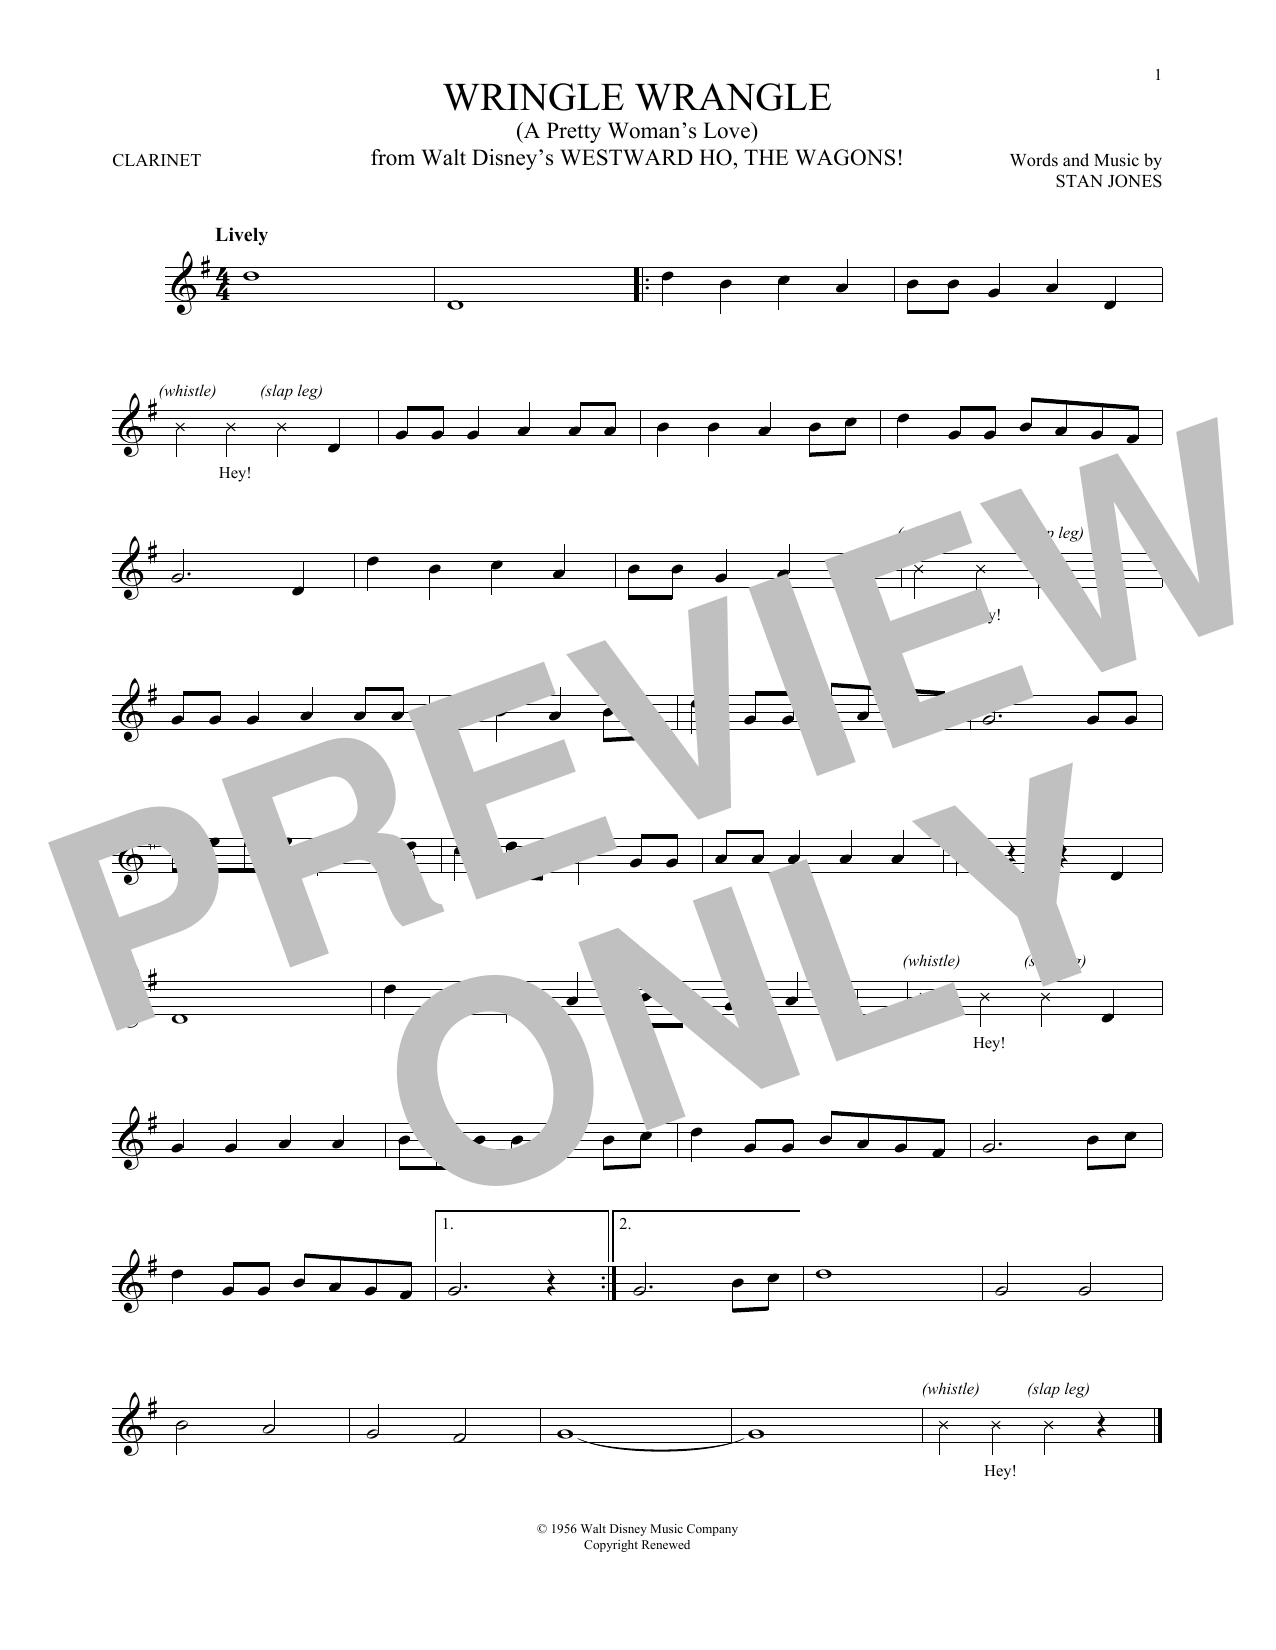 Stan Jones Wringle Wrangle (A Pretty Woman's Love) Sheet Music Notes & Chords for Cello - Download or Print PDF